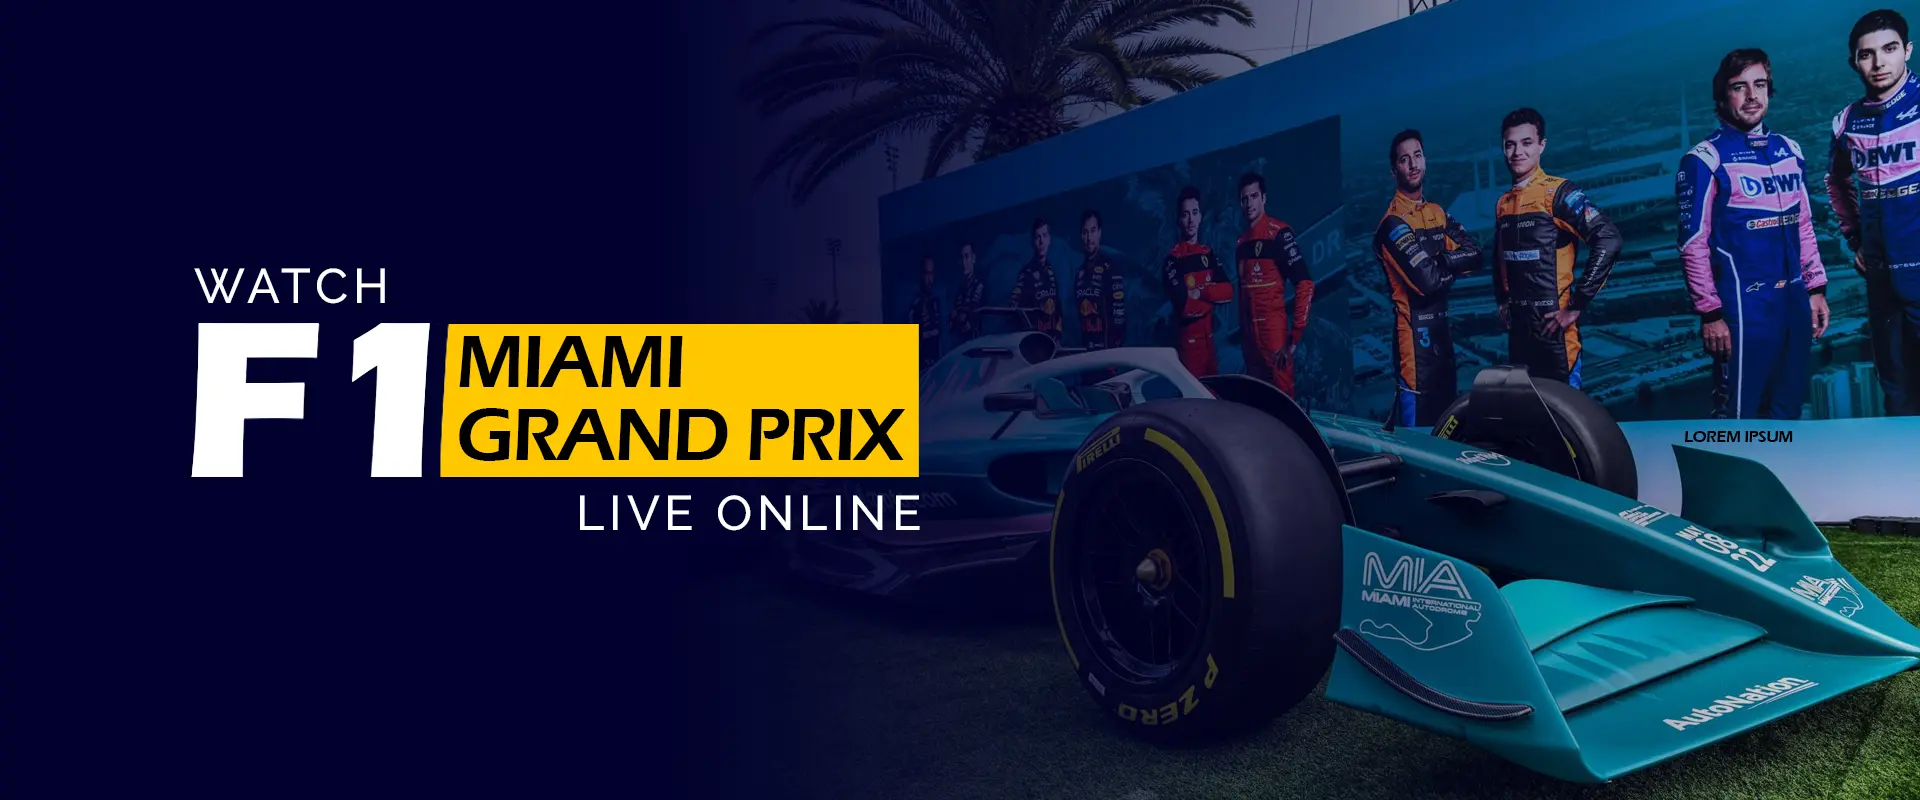 Bekijk de F1 Grand Prix van Miami live online